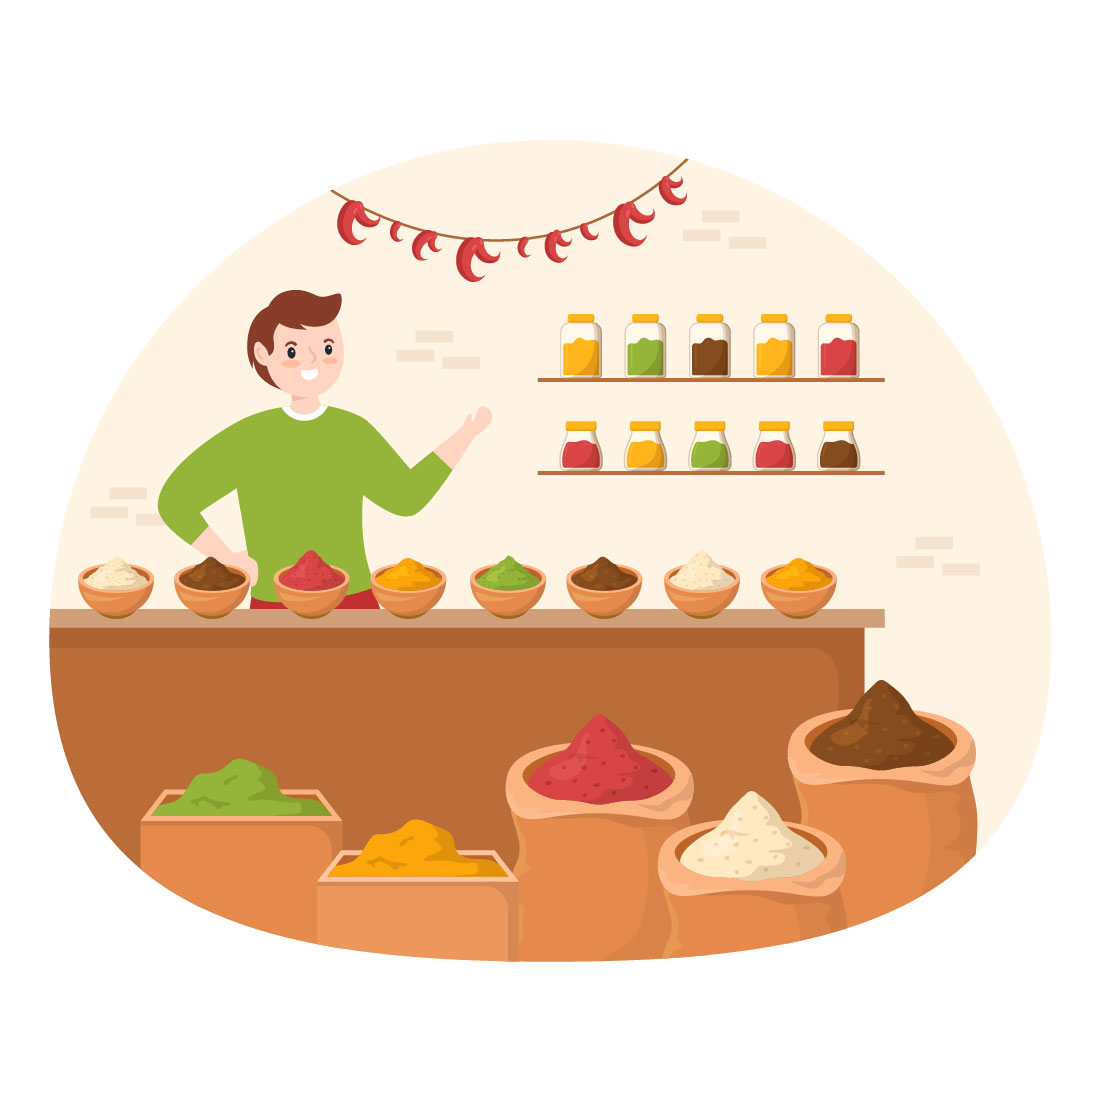 Spice Shop Illustration cover image.